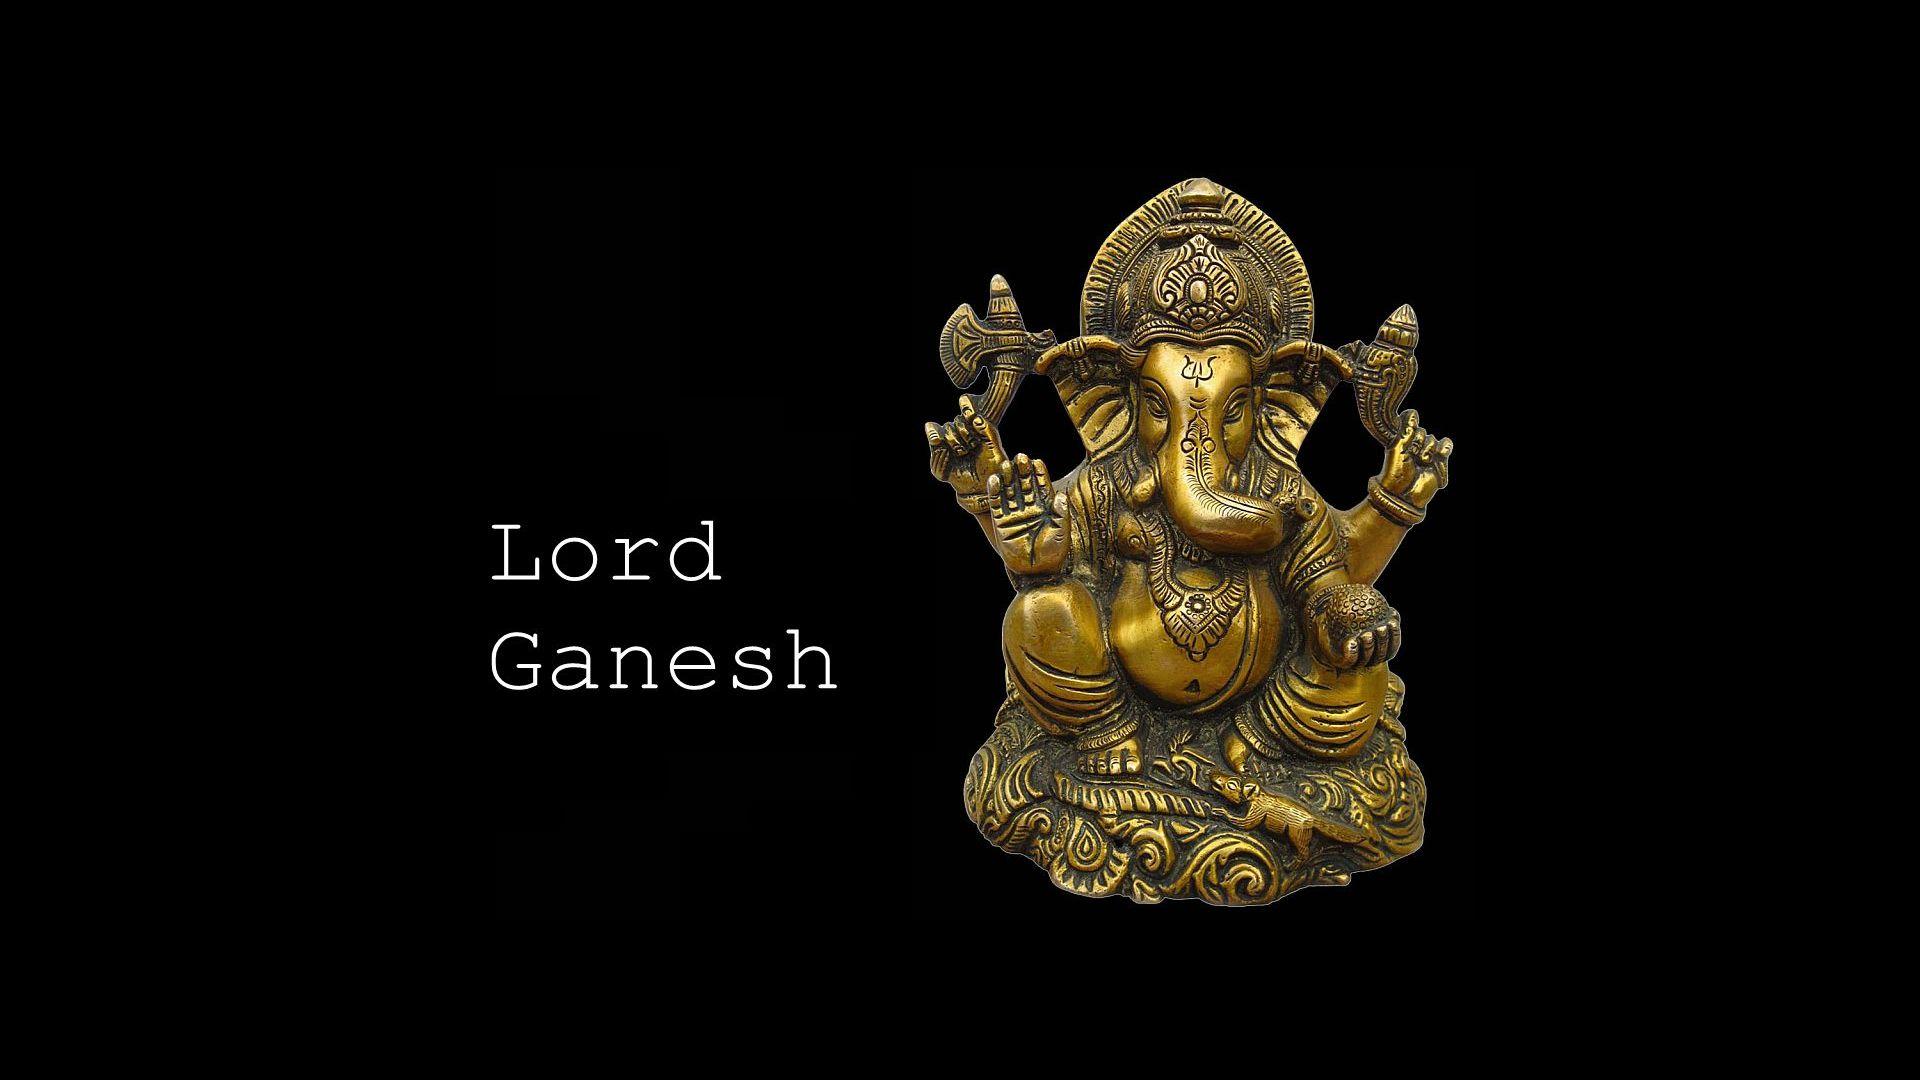 Download Lord Ganesha HD Desktop Wallpaper. Hindu Gods and Goddesses